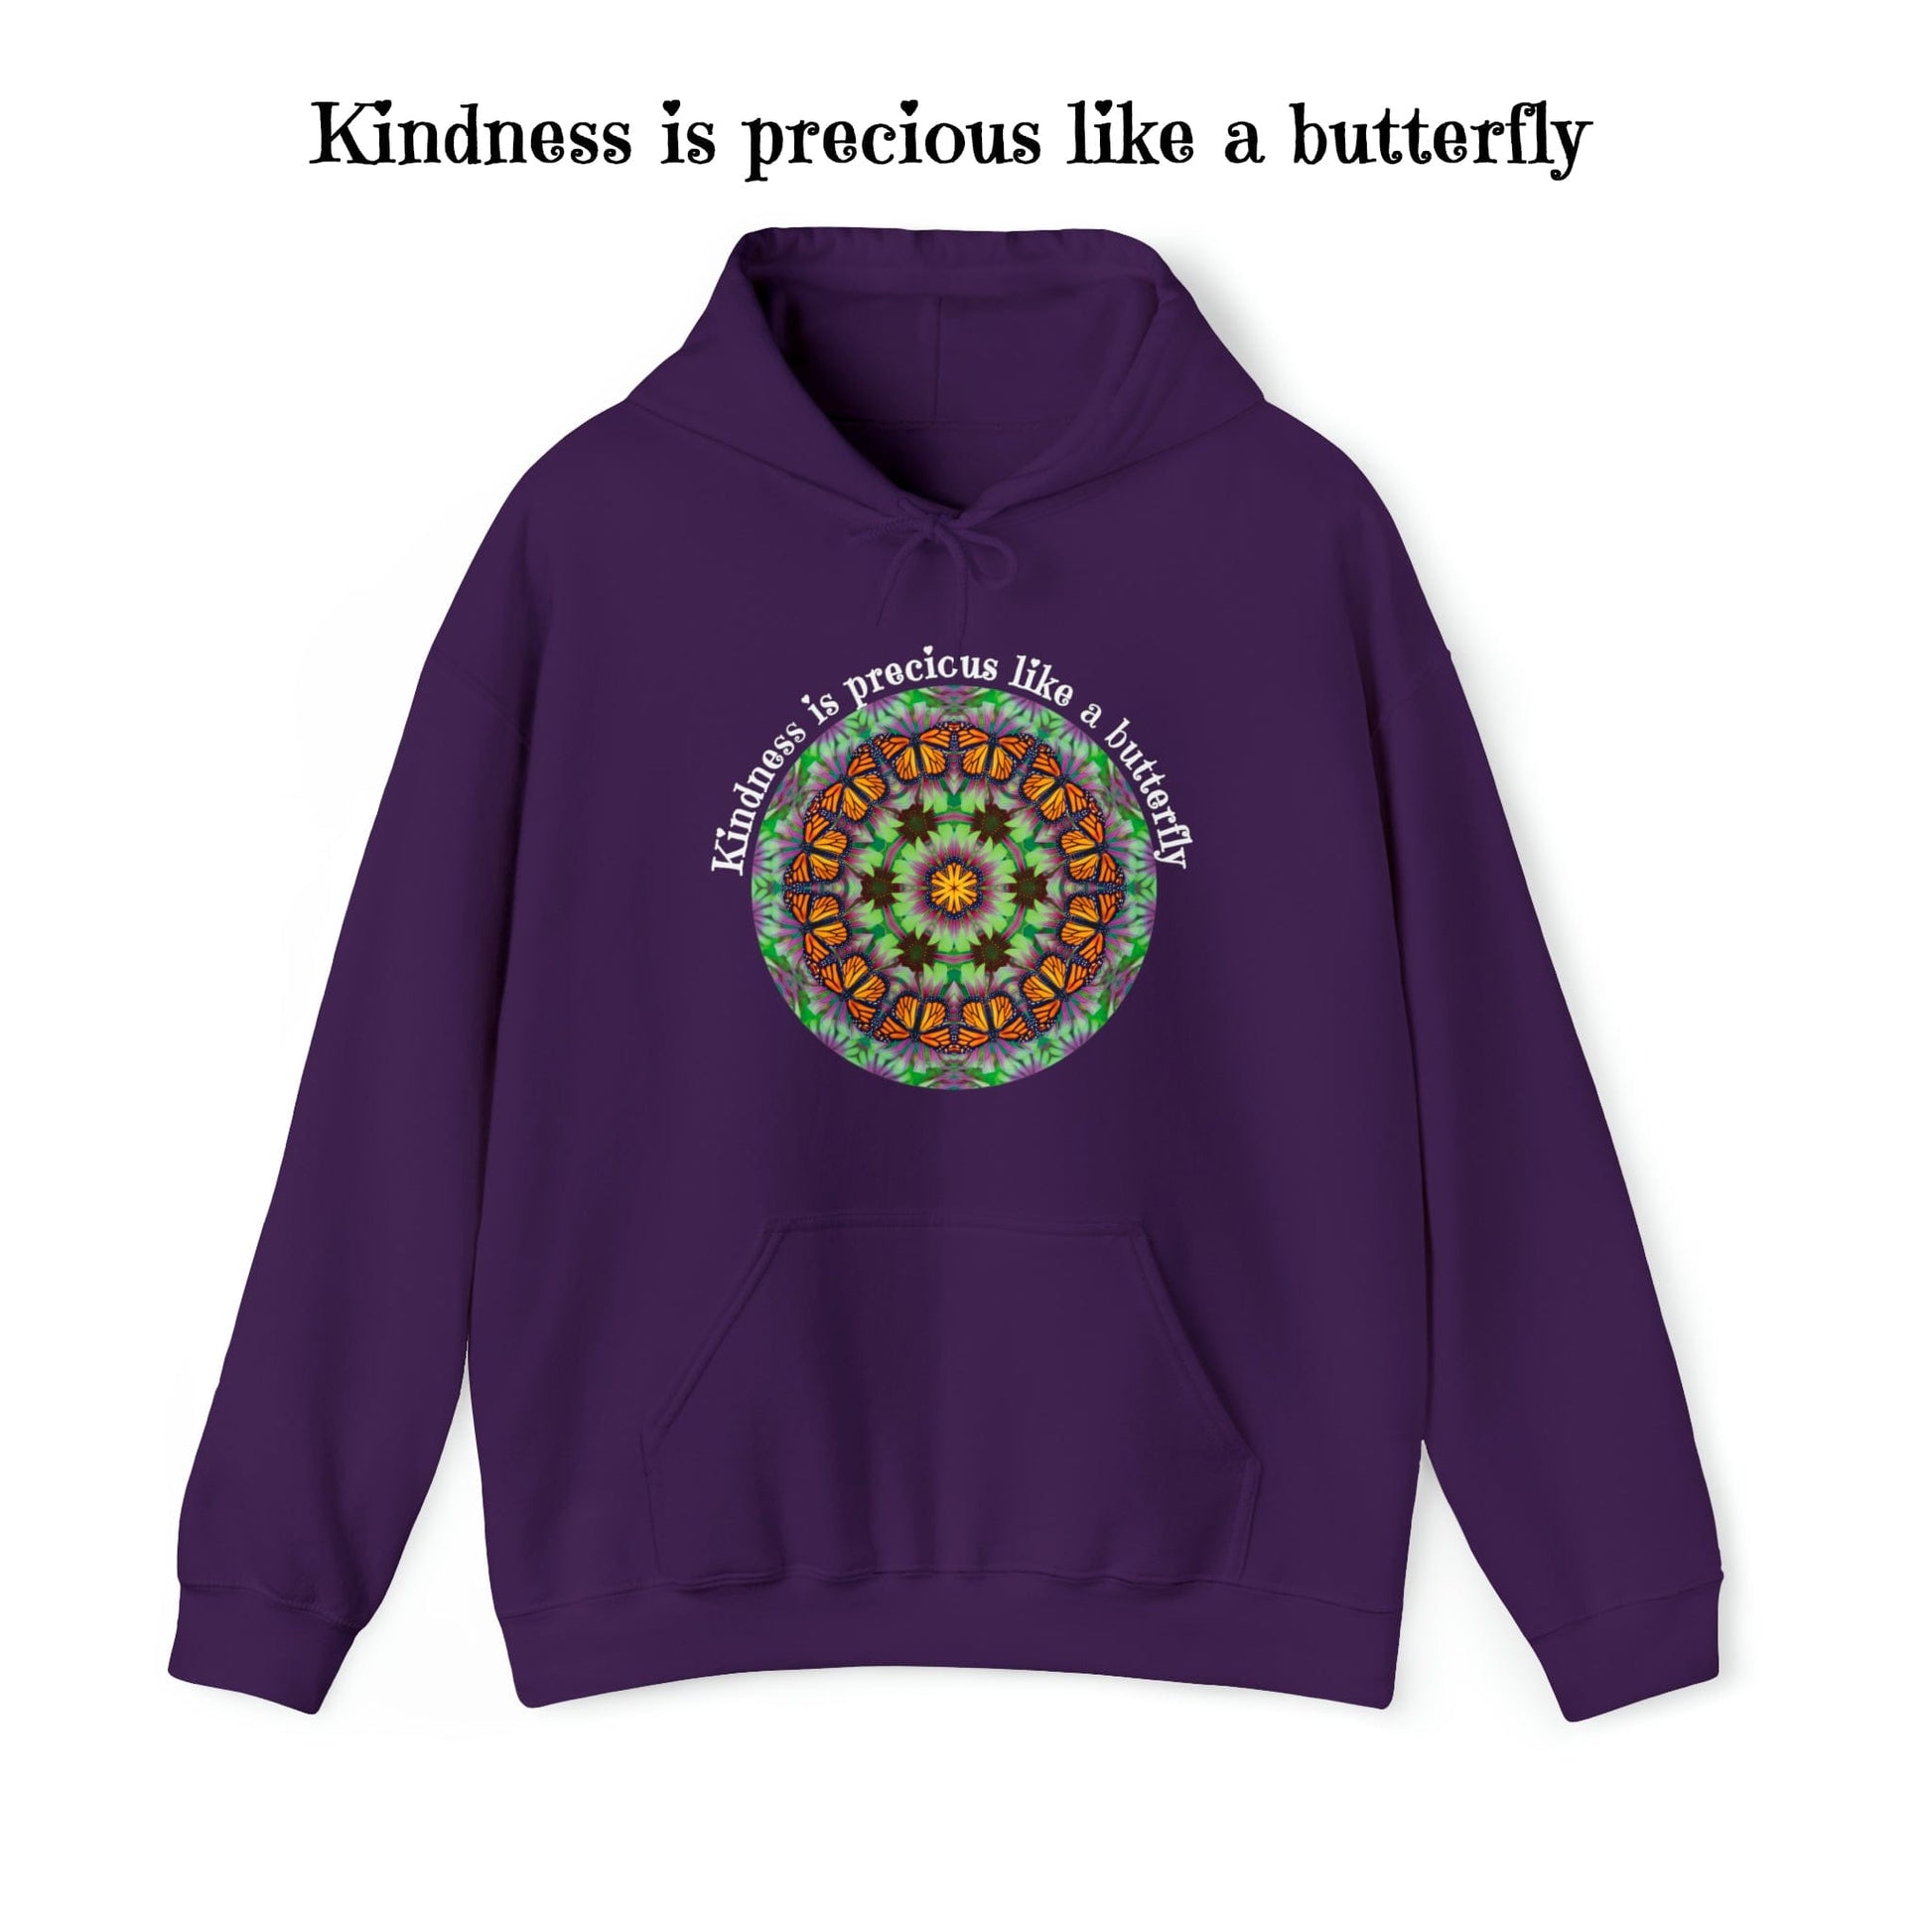 Pretty & Cute Butterfly Kindness Graphic Hoodie Sweatshirt Monarch Butterfly Mandala Art Kindness is precious like a butterfly